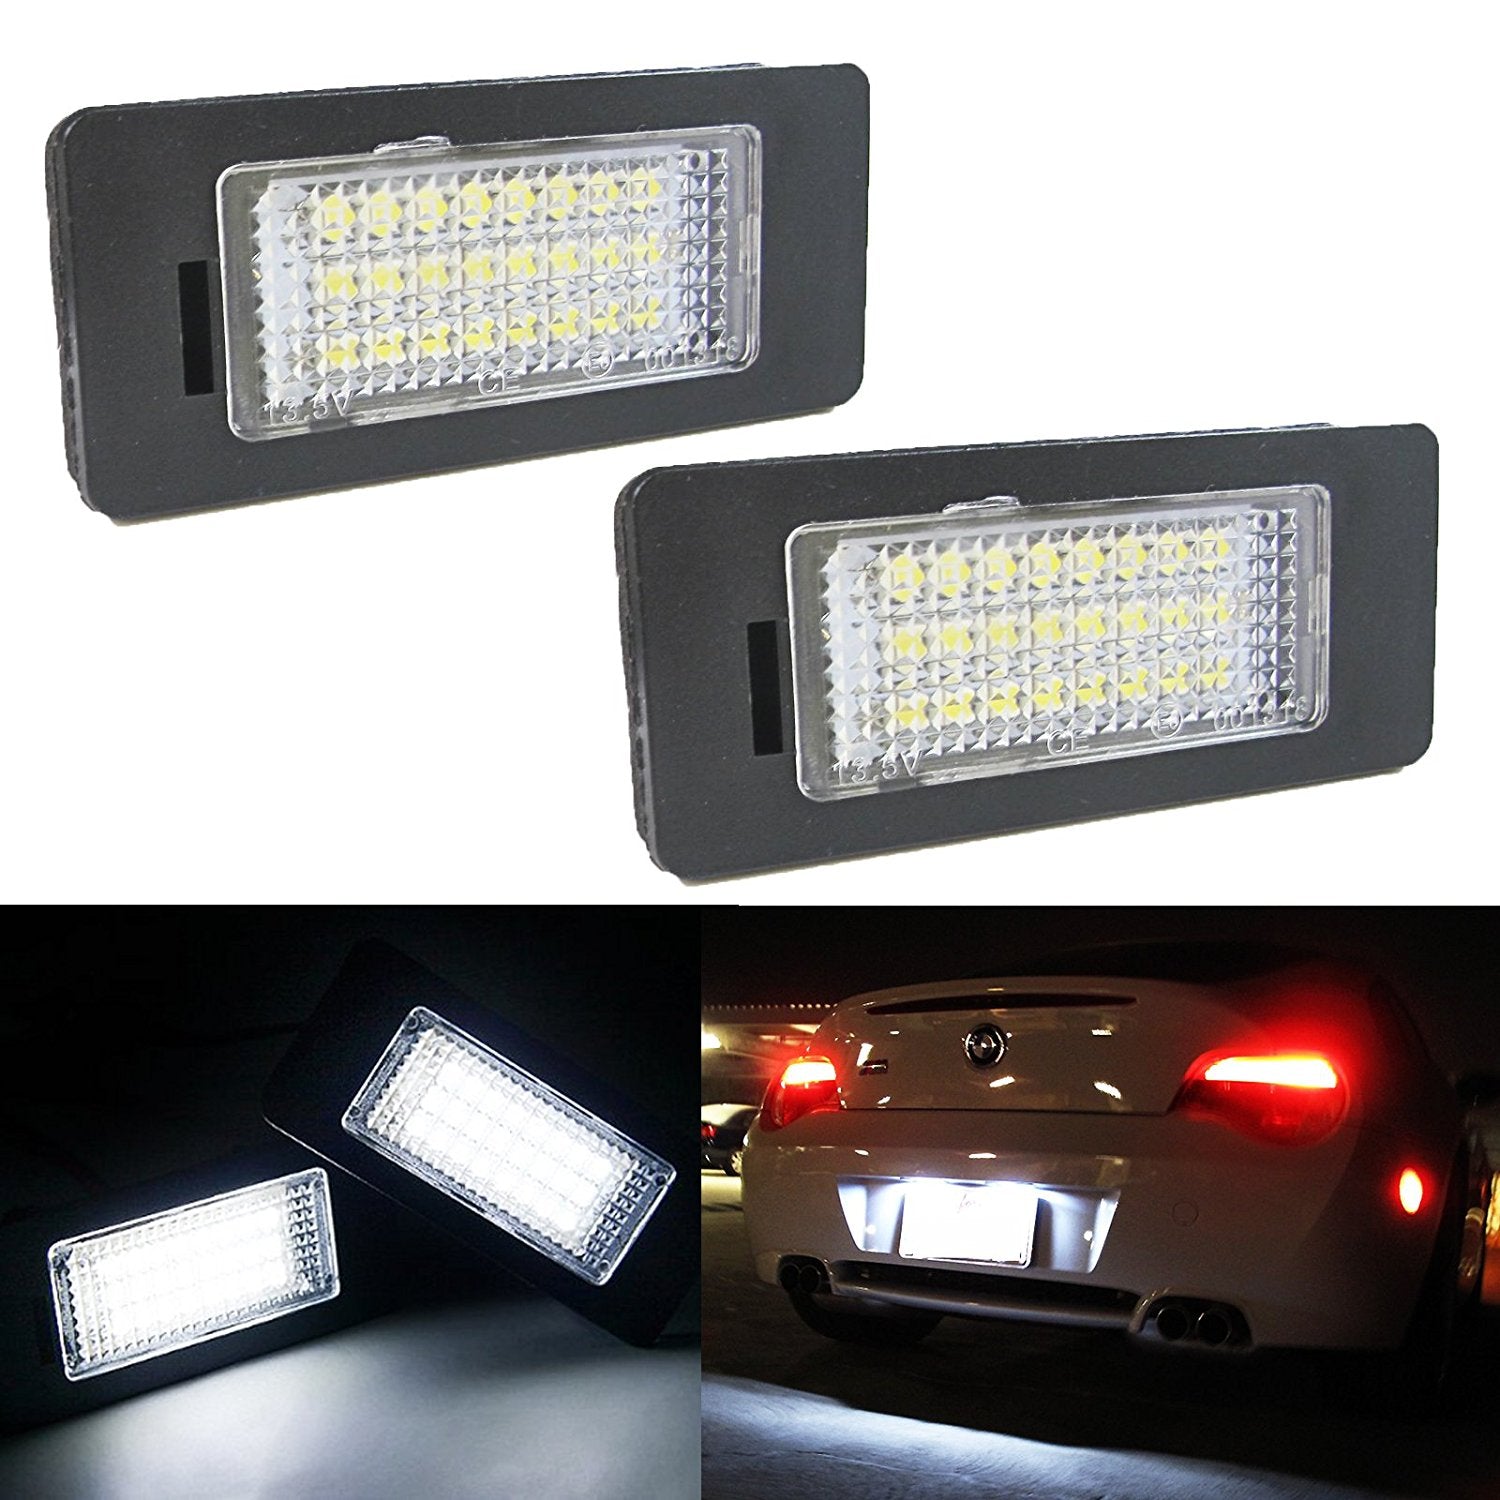 Direct Replace Error Free 24-LED License Plate Lamps For BMW E90 E92 E